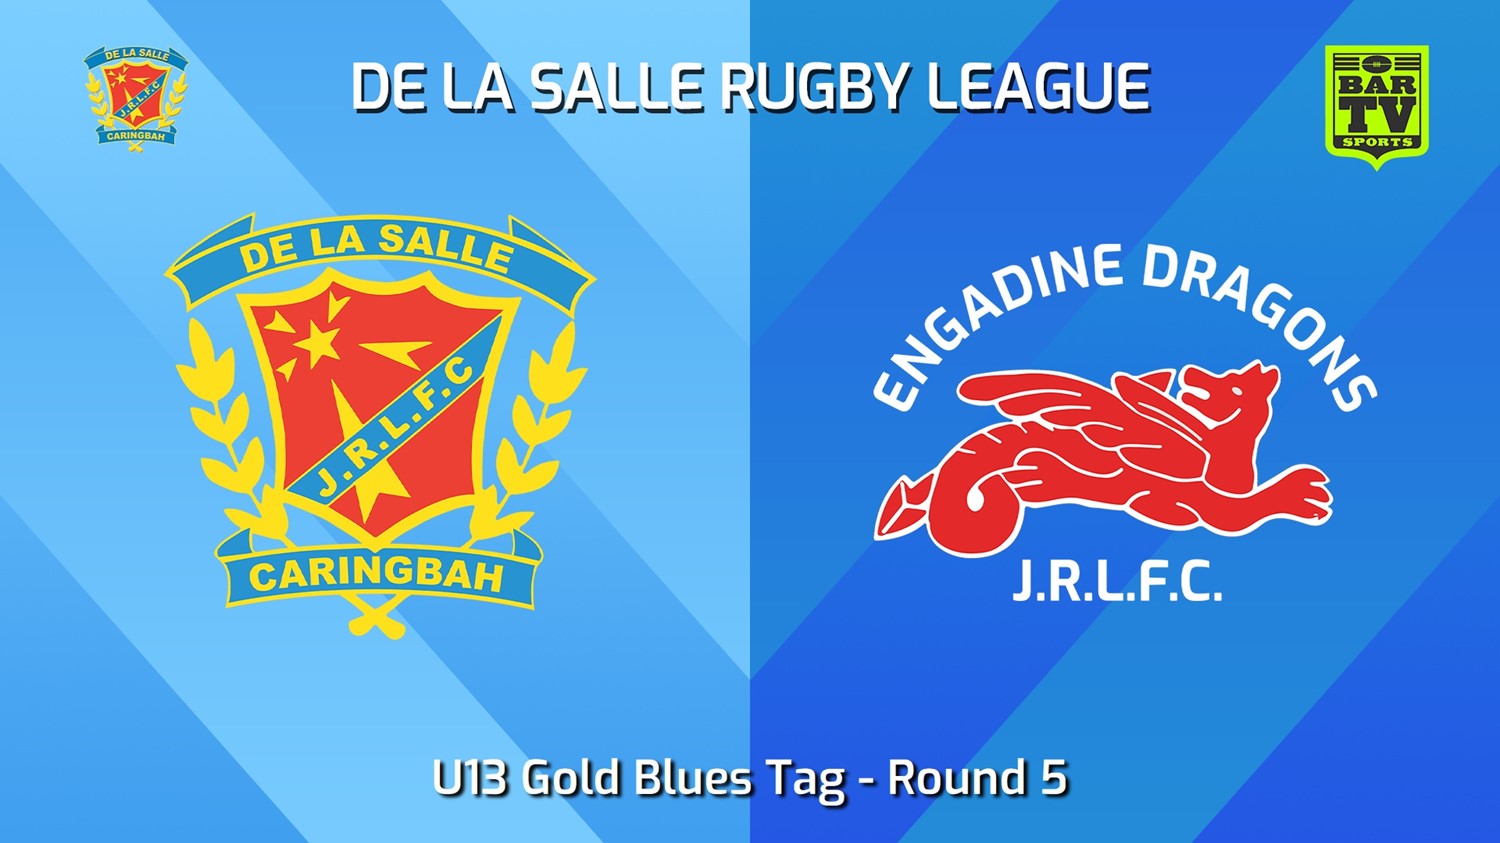 240519-video-De La Salle Round 5 - U13 Gold Blues Tag - De La Salle v Engadine Dragons Slate Image